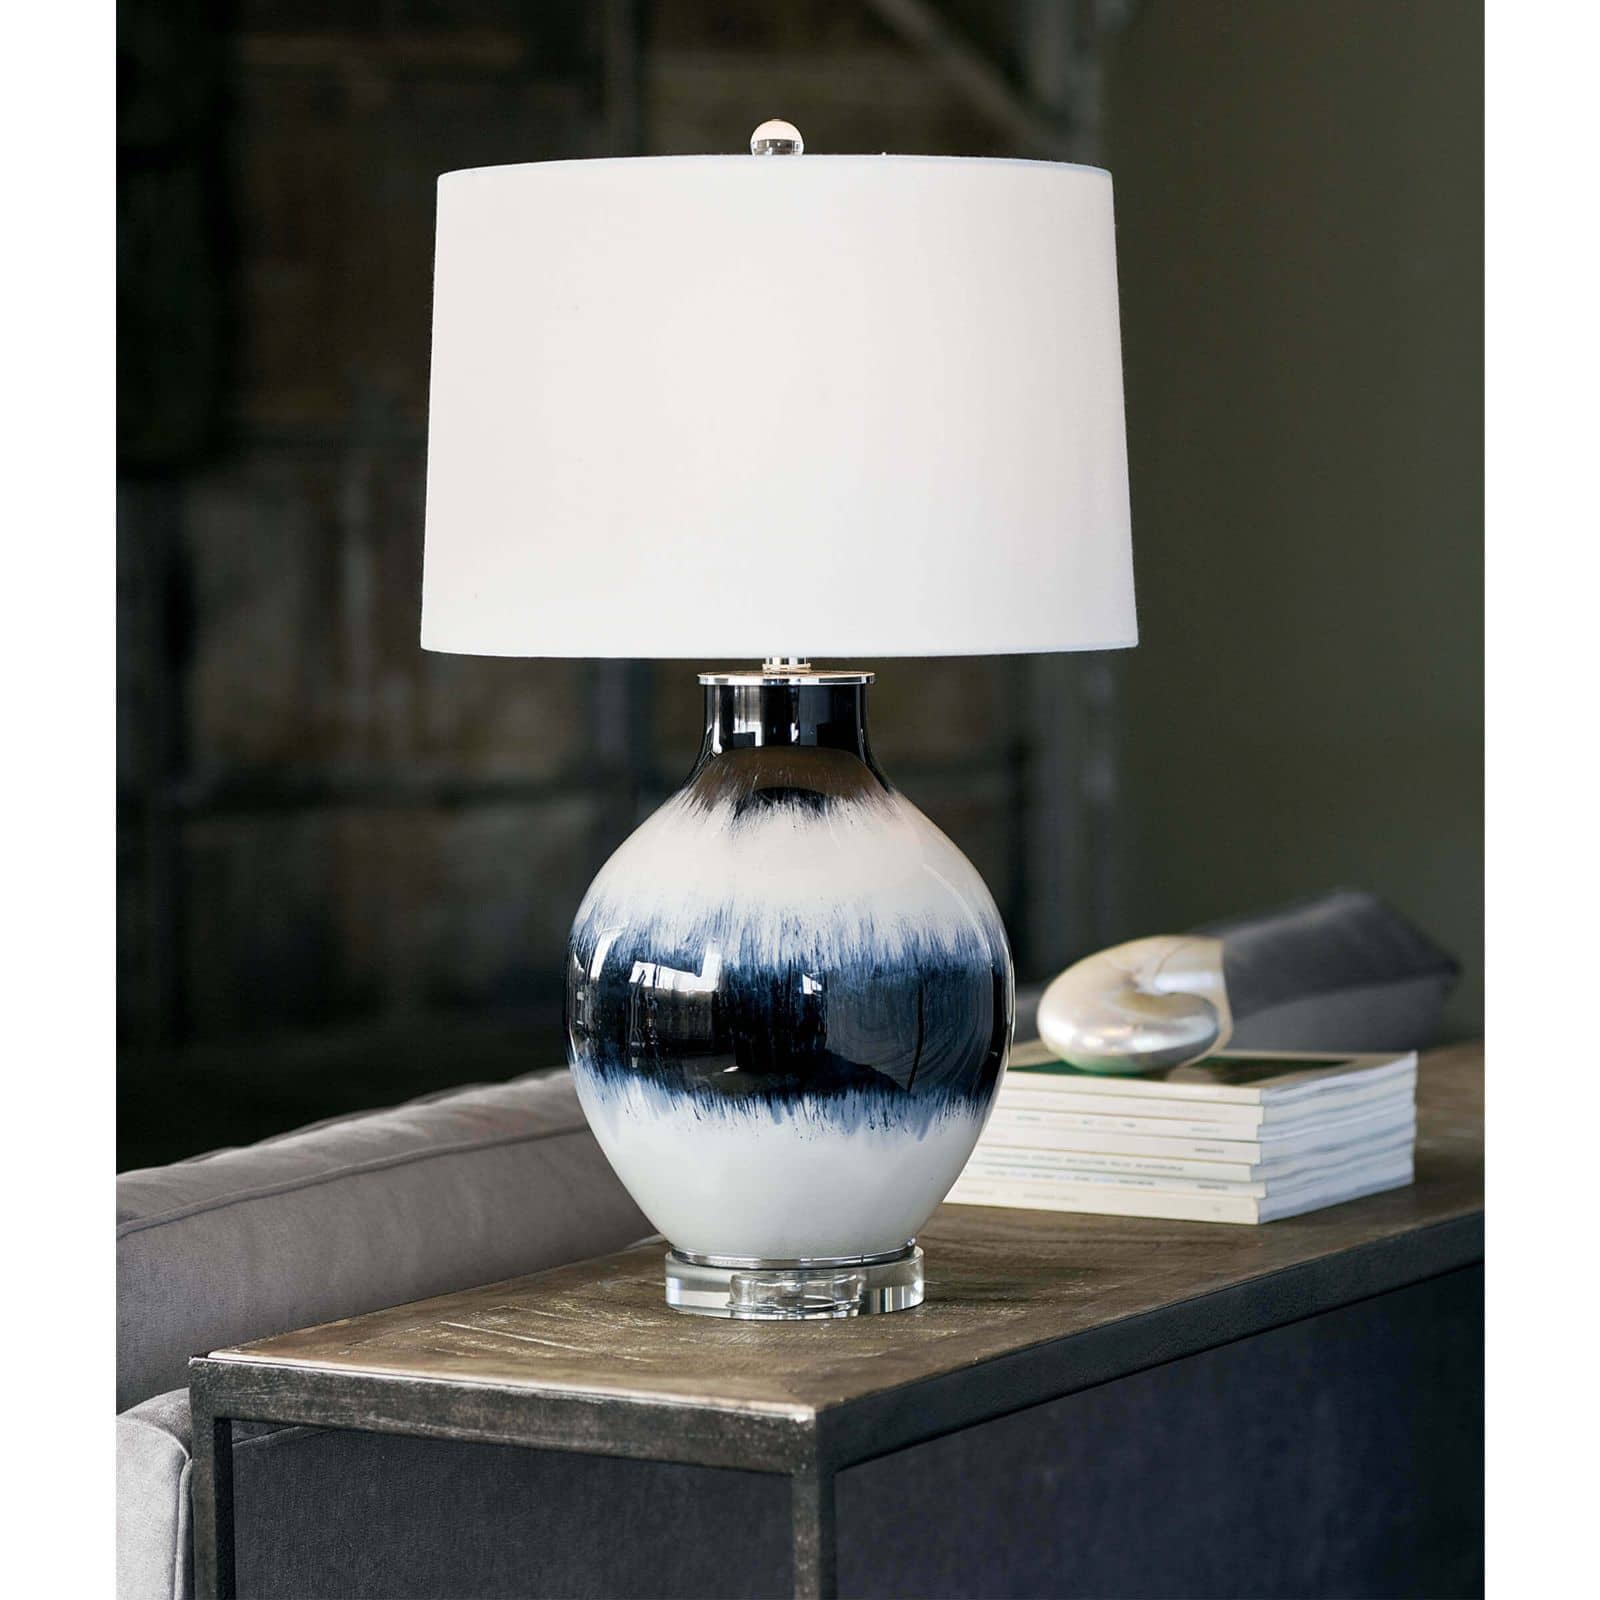 Indigo Table Lamp by Coastal Living